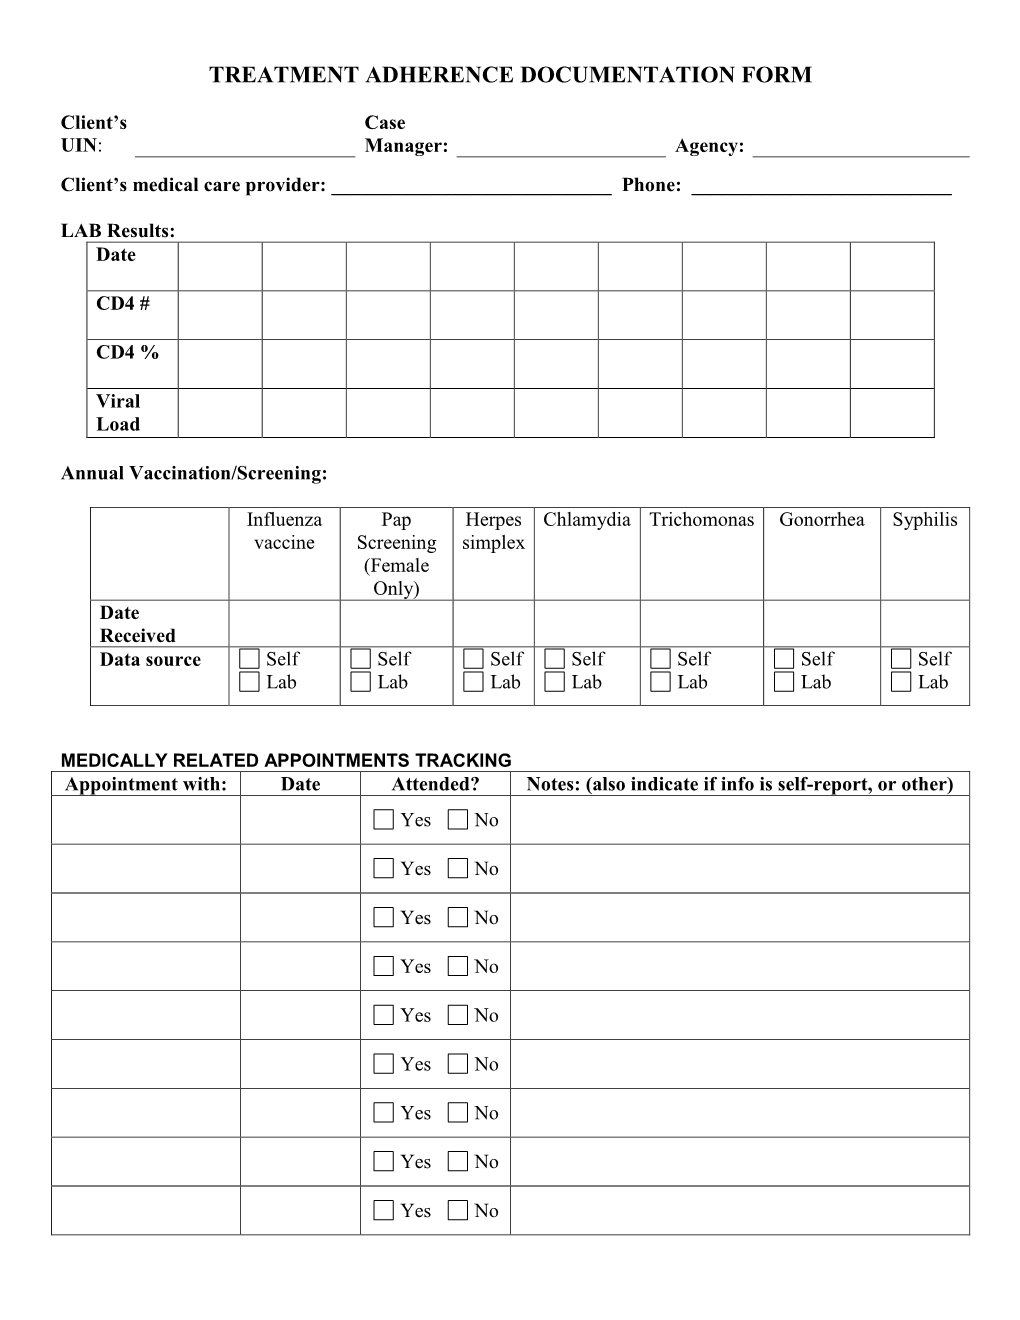 Treatment Adherence Documentation Form